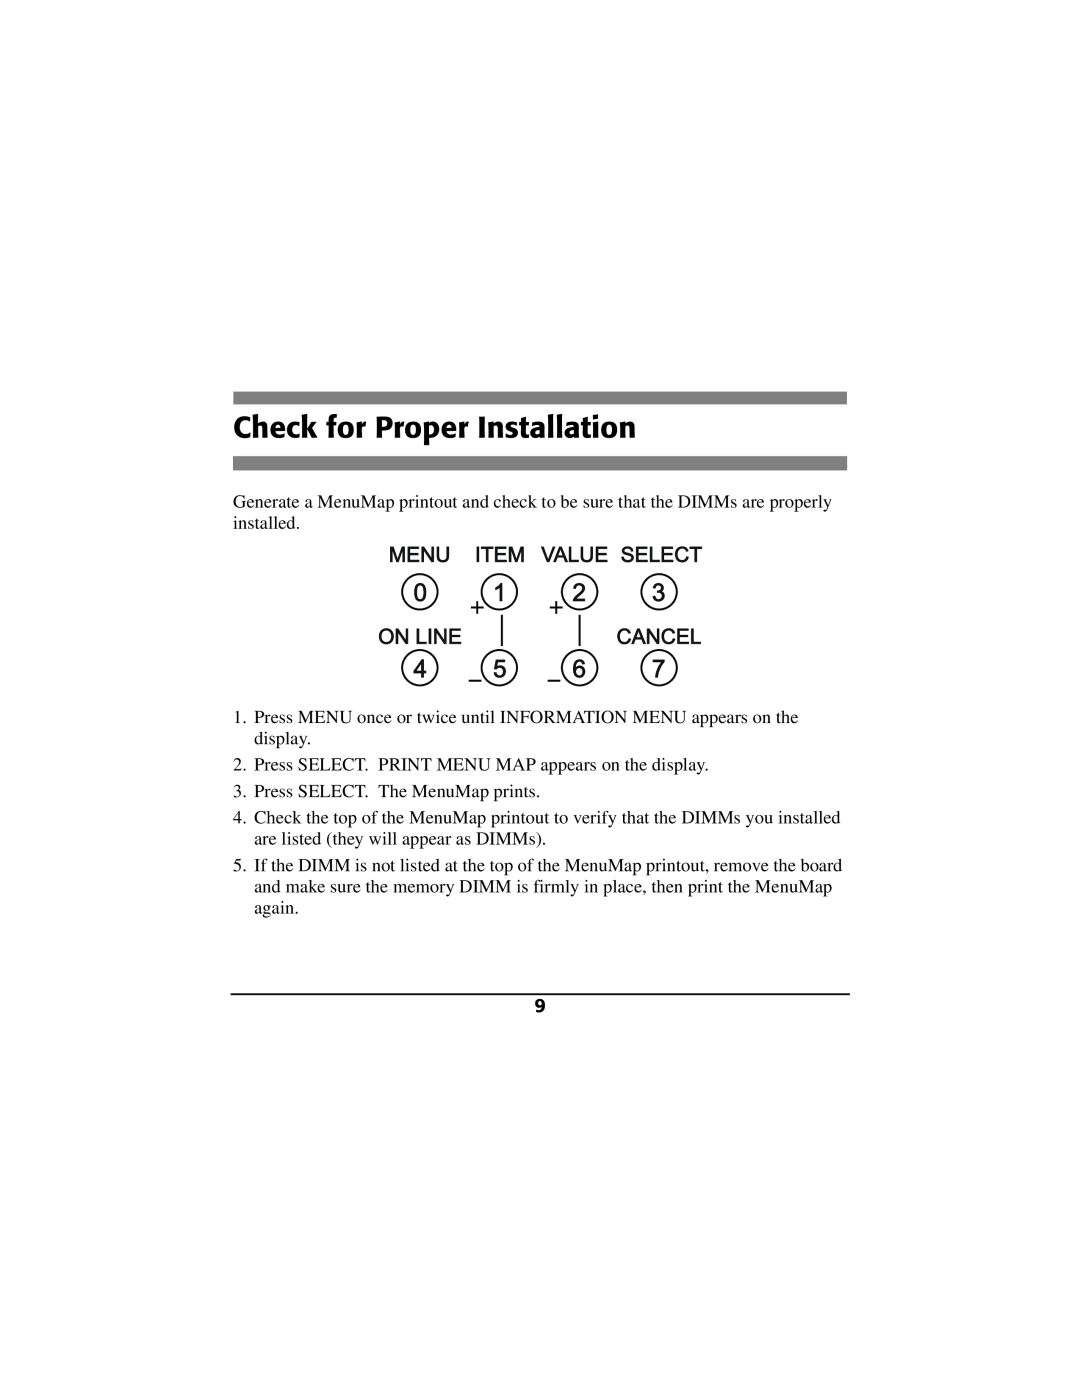 Oki 70040901 installation instructions Check for Proper Installation, 0 1, 4 5, Menu Item Value Select, On Line, Cancel 